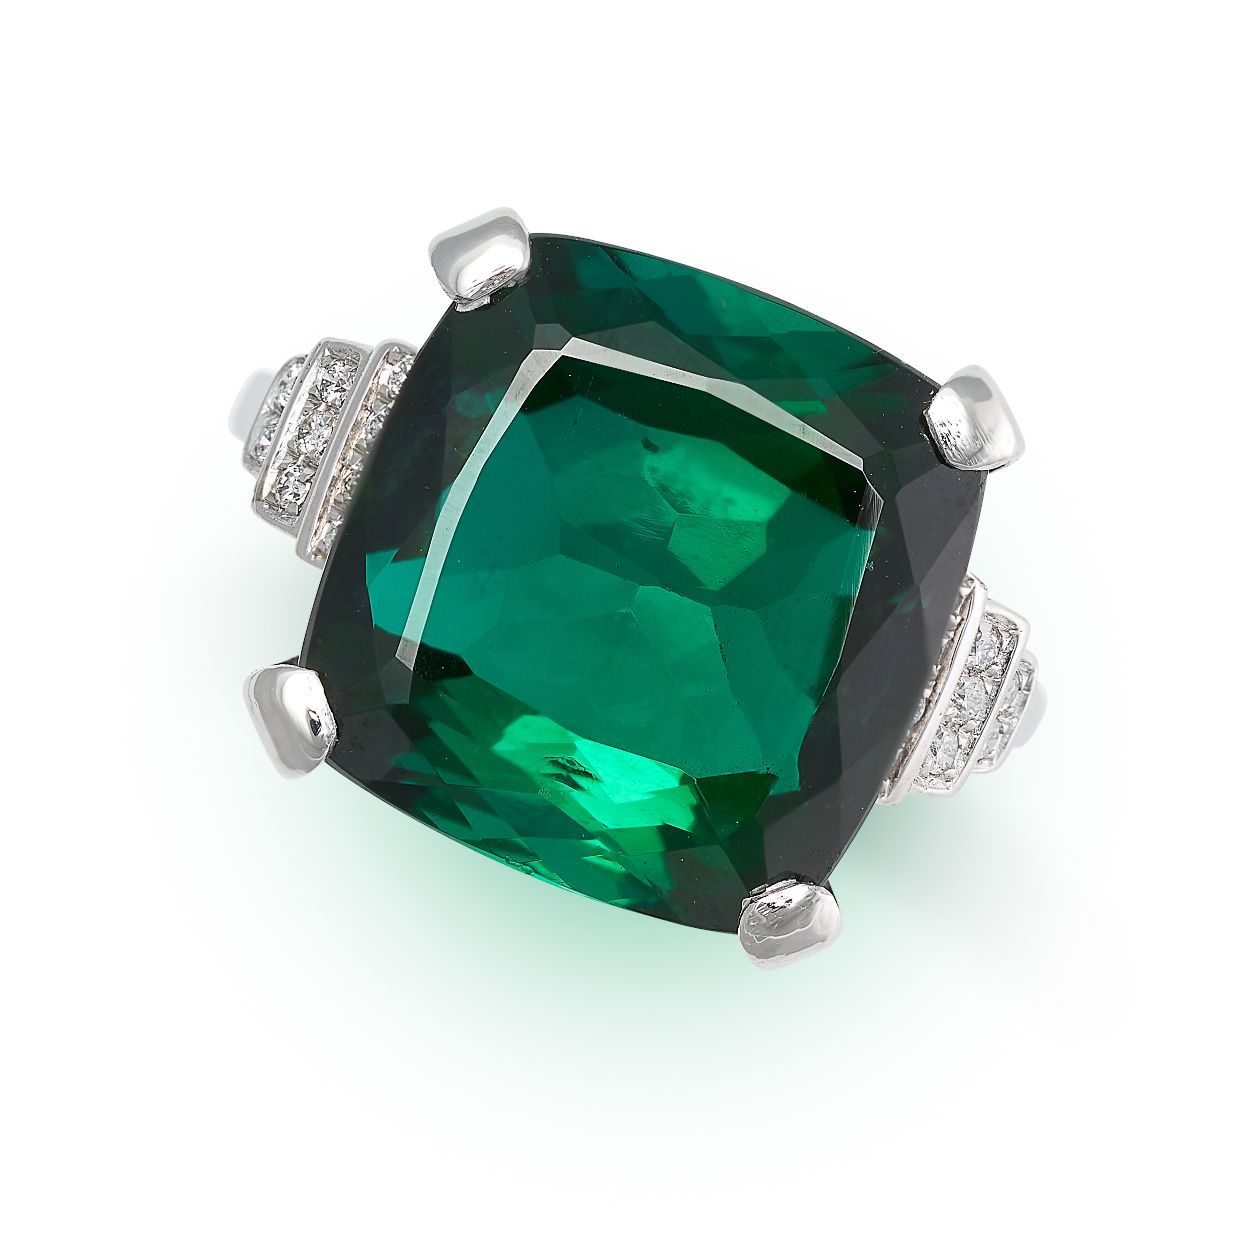 Null 绿色碧玺和钻石戒指，镶有13.47克拉的枕形切割绿色碧玺，阶梯状的肩部镶嵌着圆形切割的钻石，没有化验标记，尺寸为O / 7，7.9克。